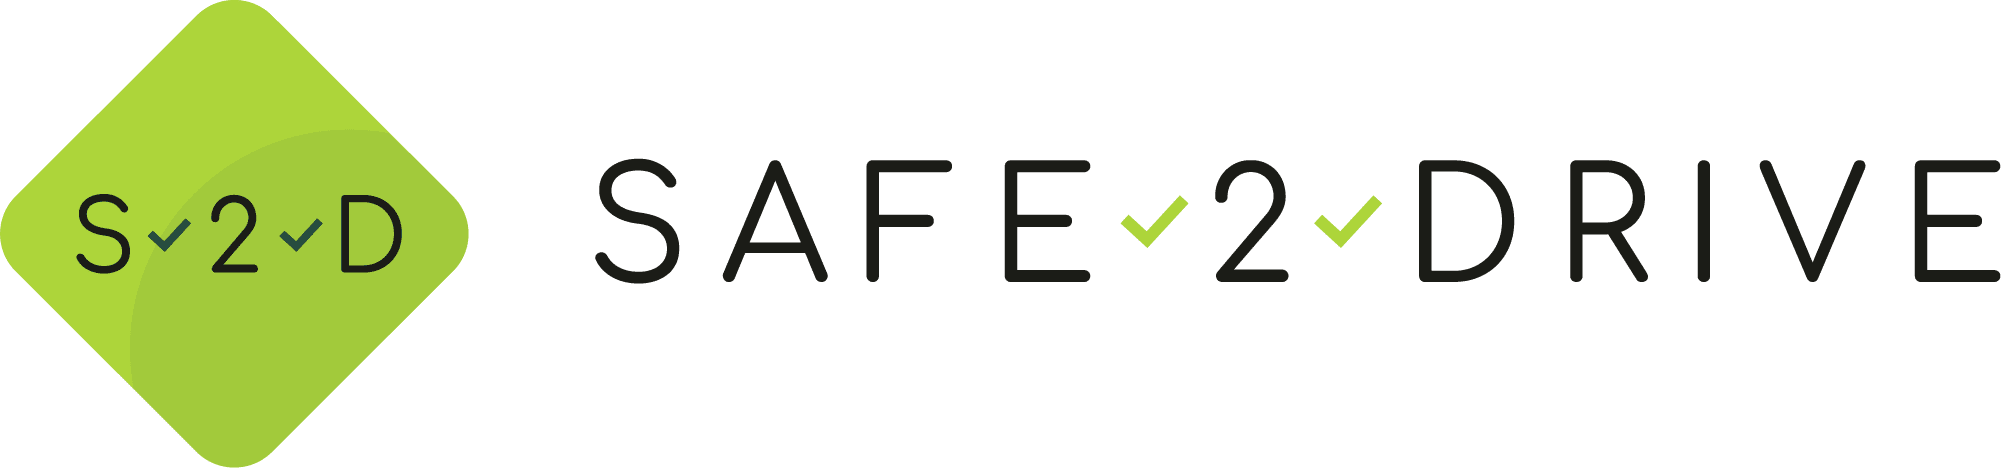 Safe 2 Drive - S2D logo 